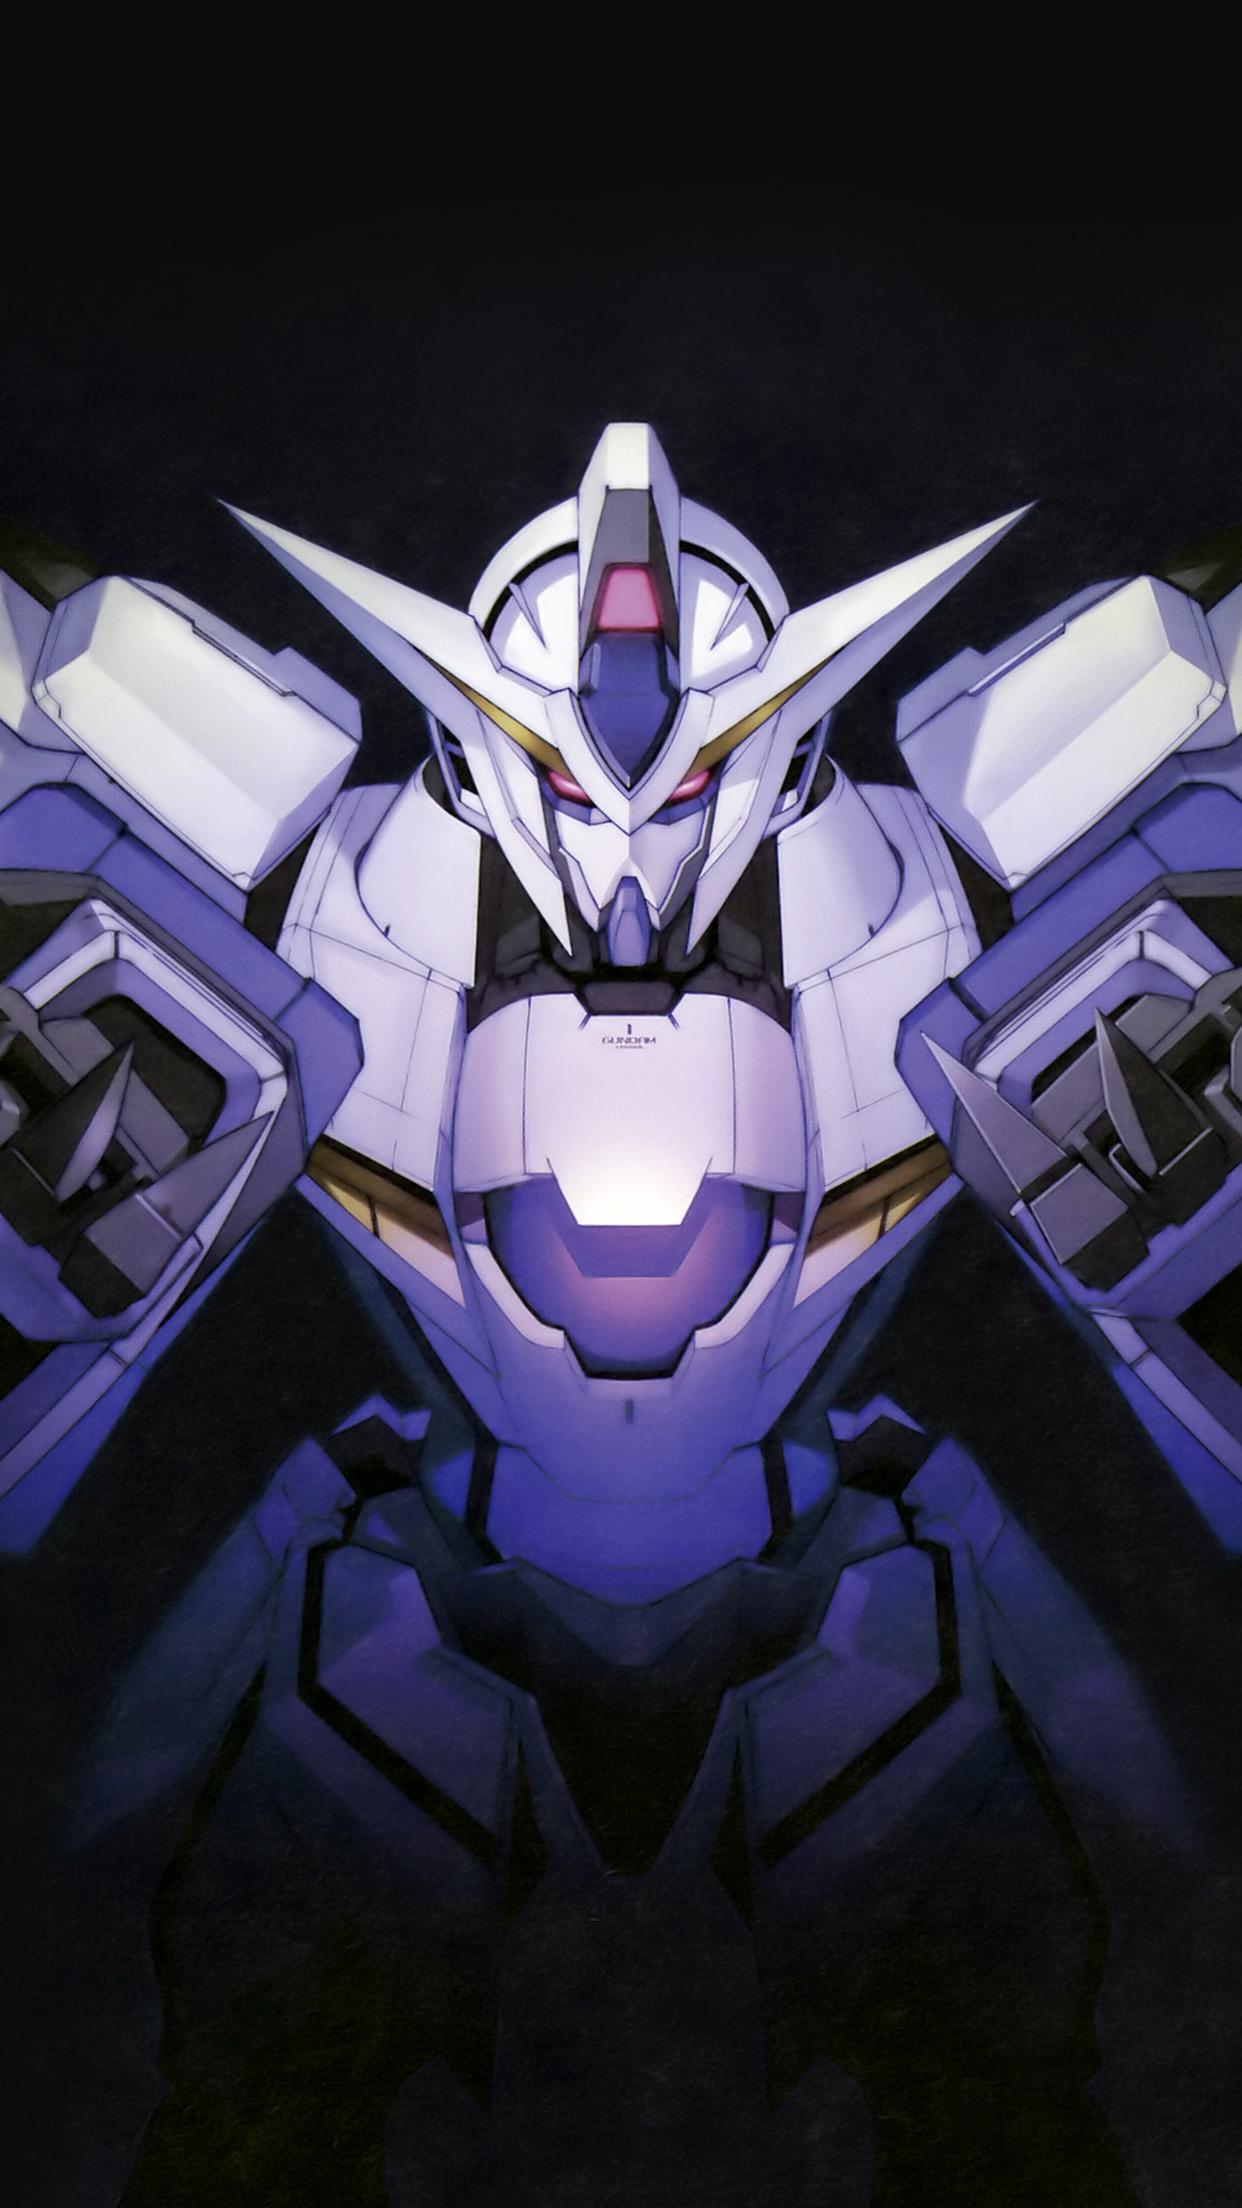 Gundam Art Dark Toy Game Illust Art Android wallpaper